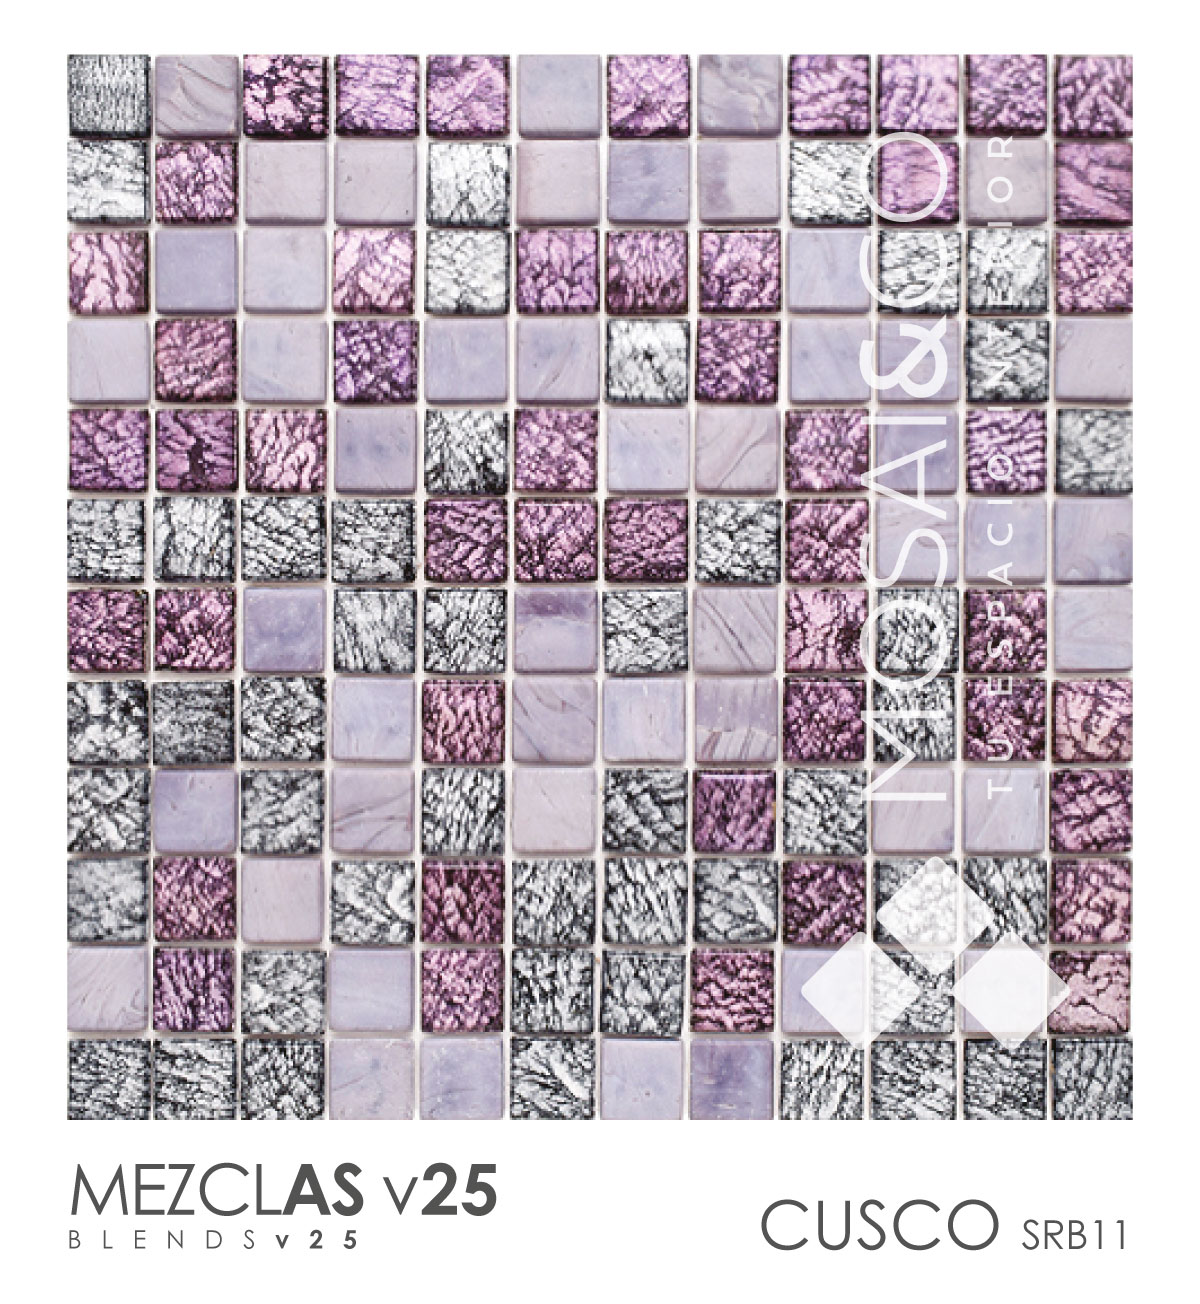 Mezclas-v25-MosaiCo-CUSCO-SRB11